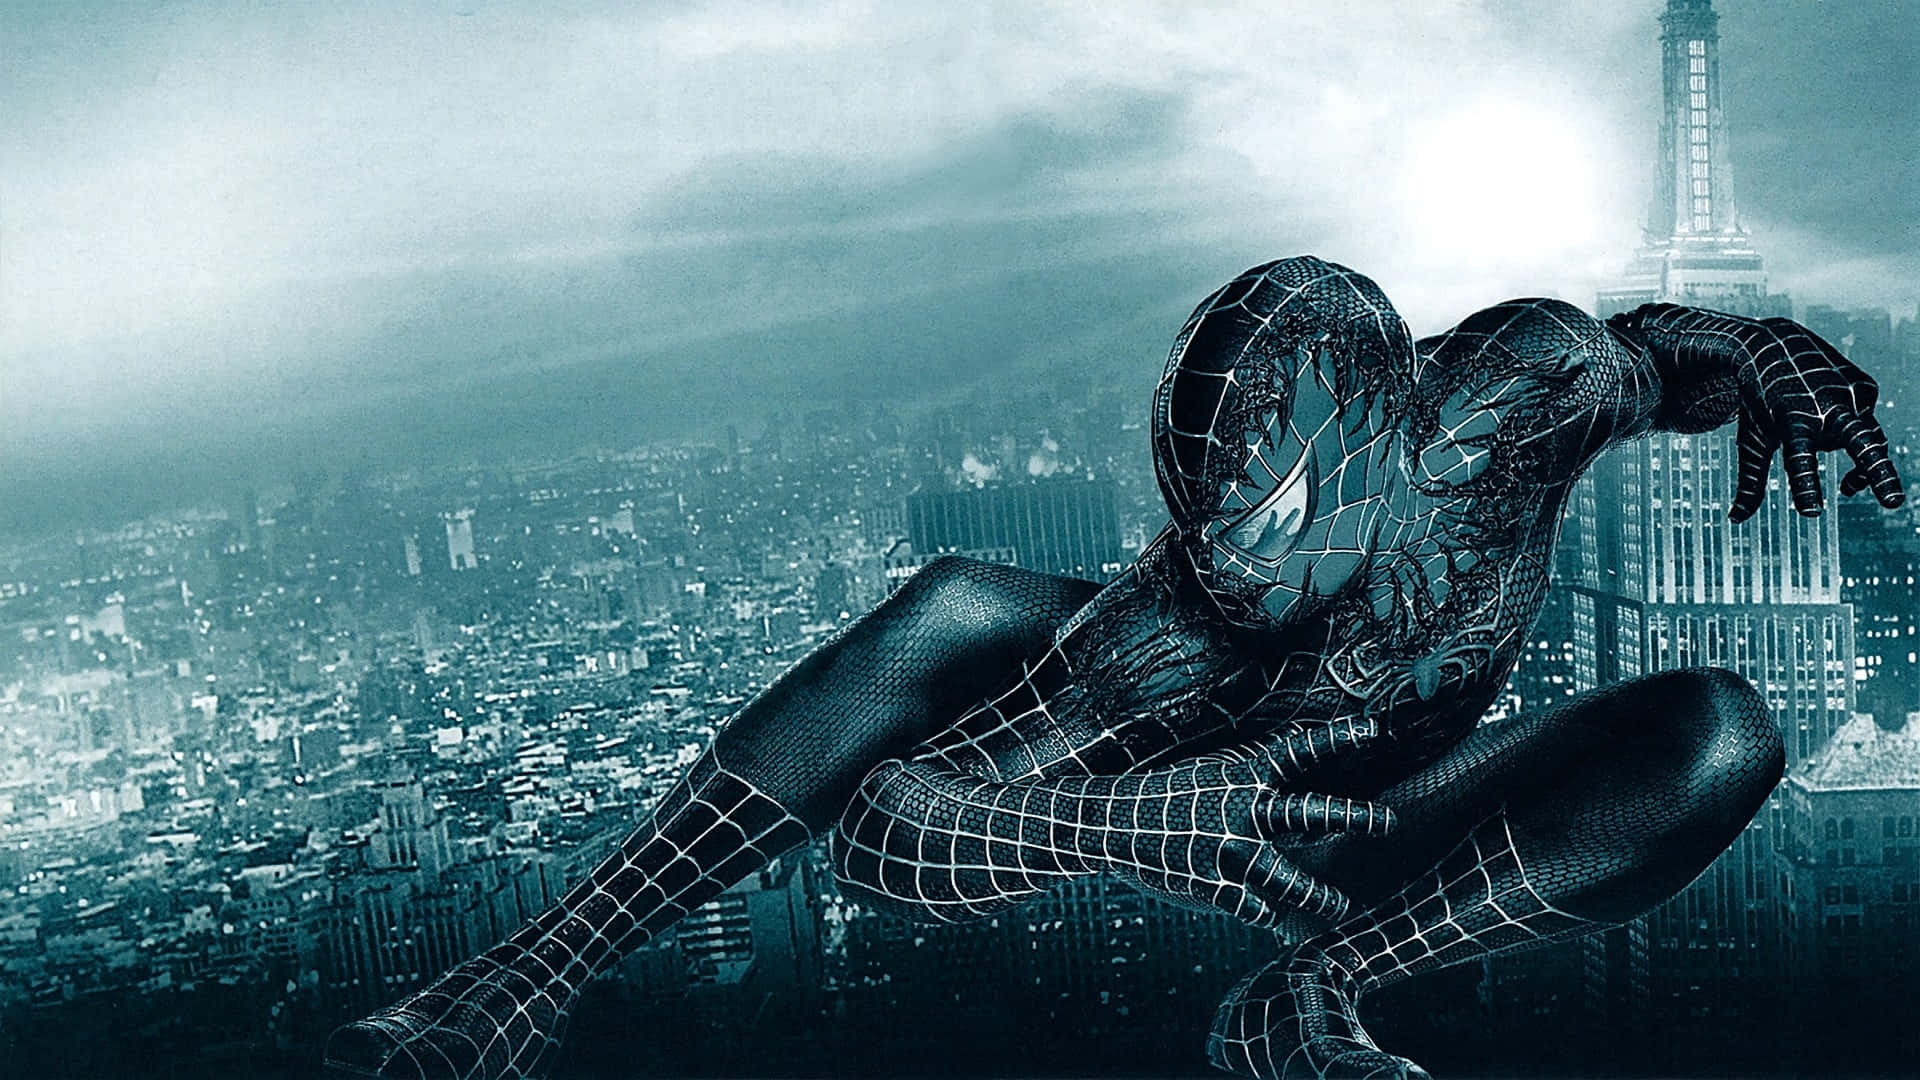 Spider-Man swinging through the city in Spider-Man 3 Wallpaper